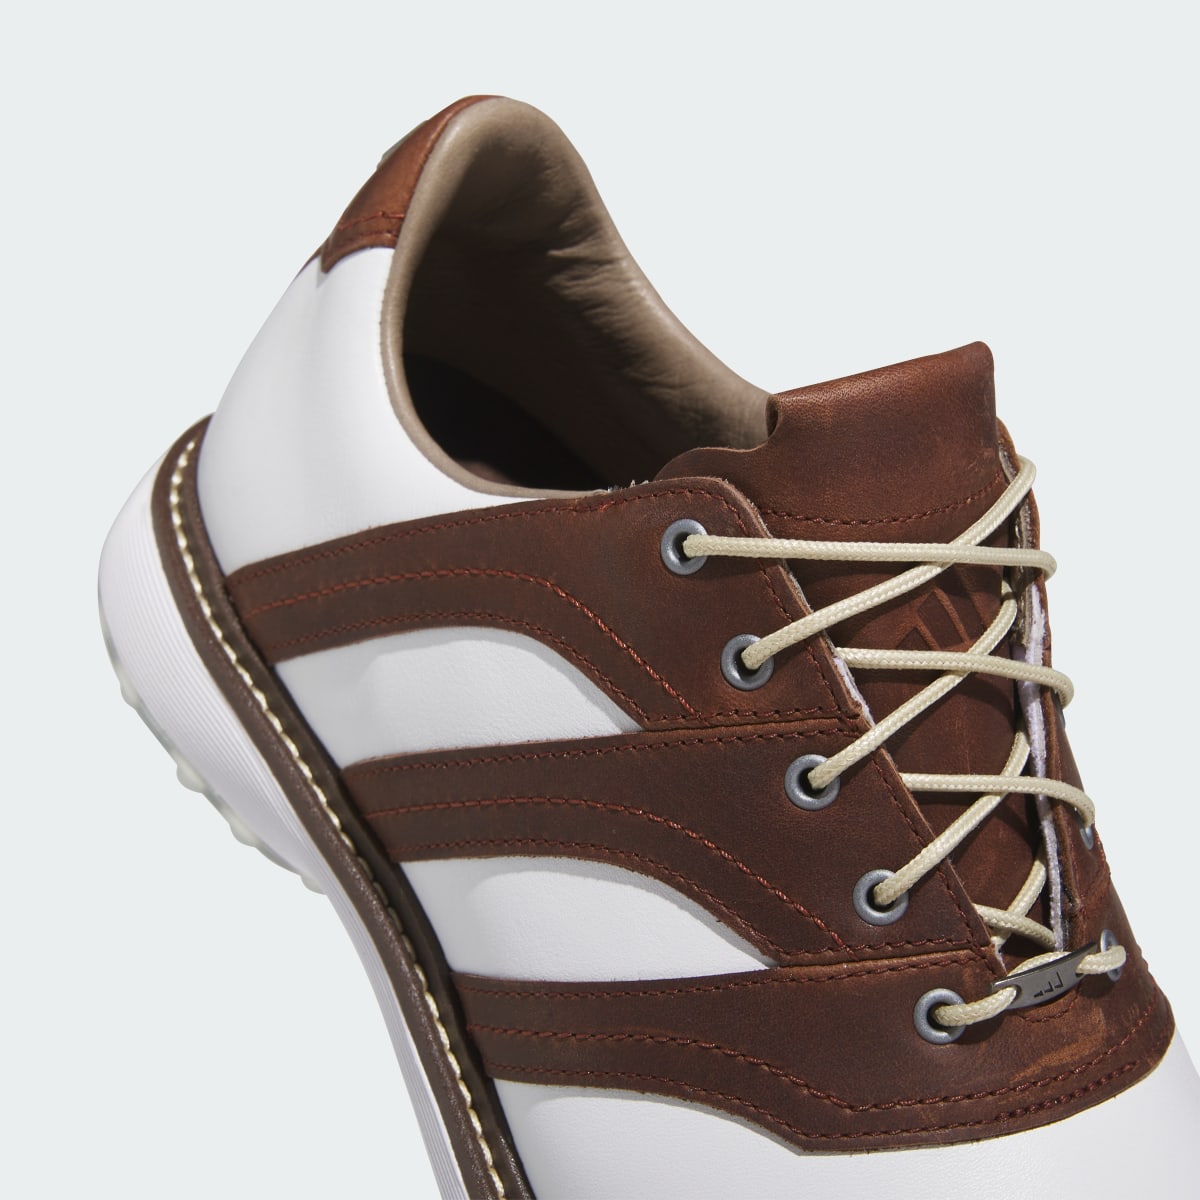 Adidas MC Z-Traxion Spikeless Golf Shoes. 8